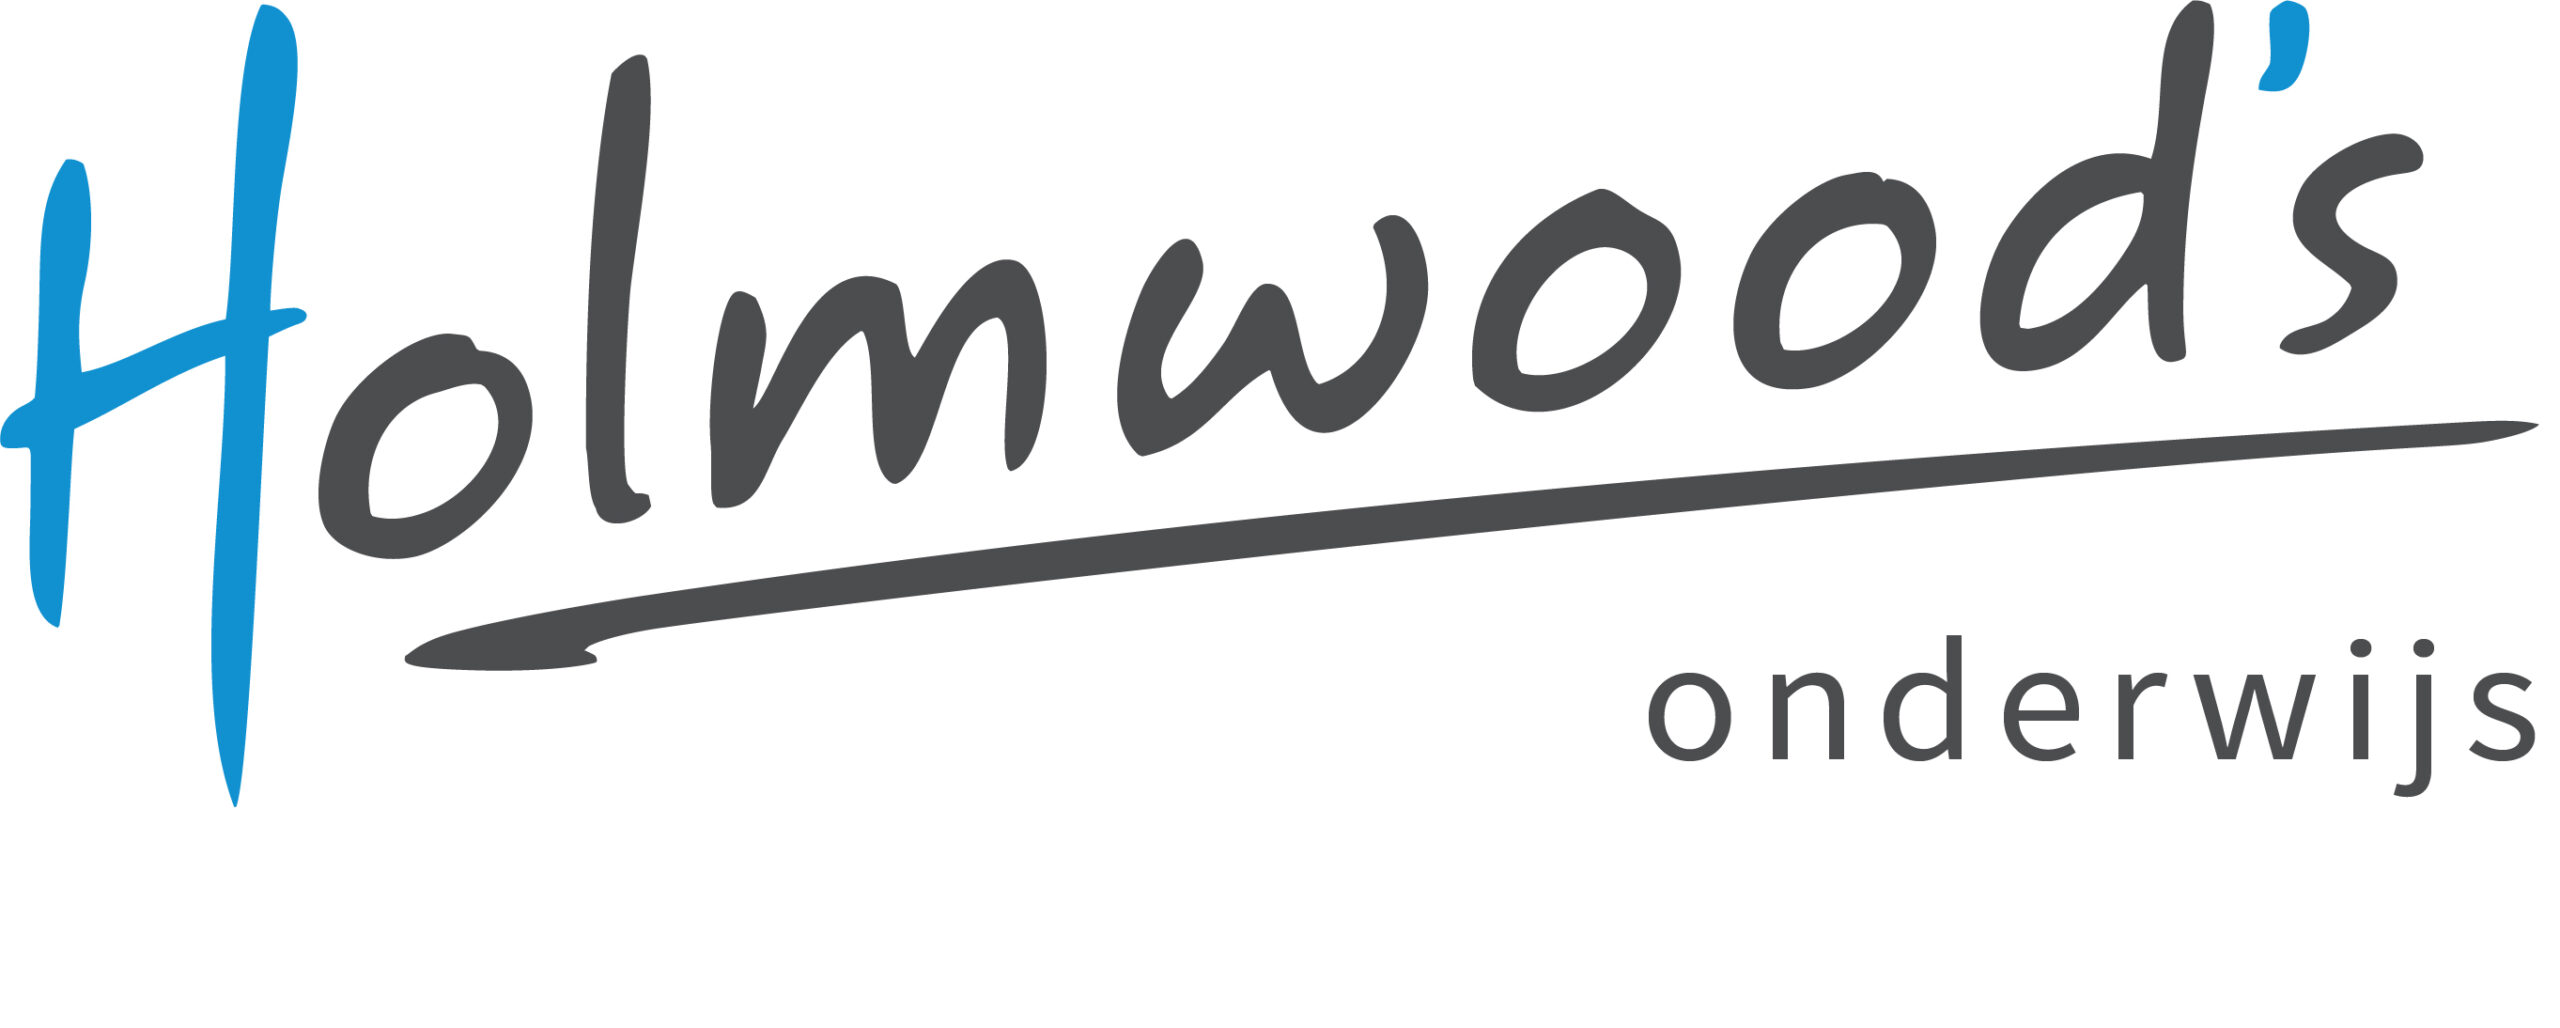 Holmwoods